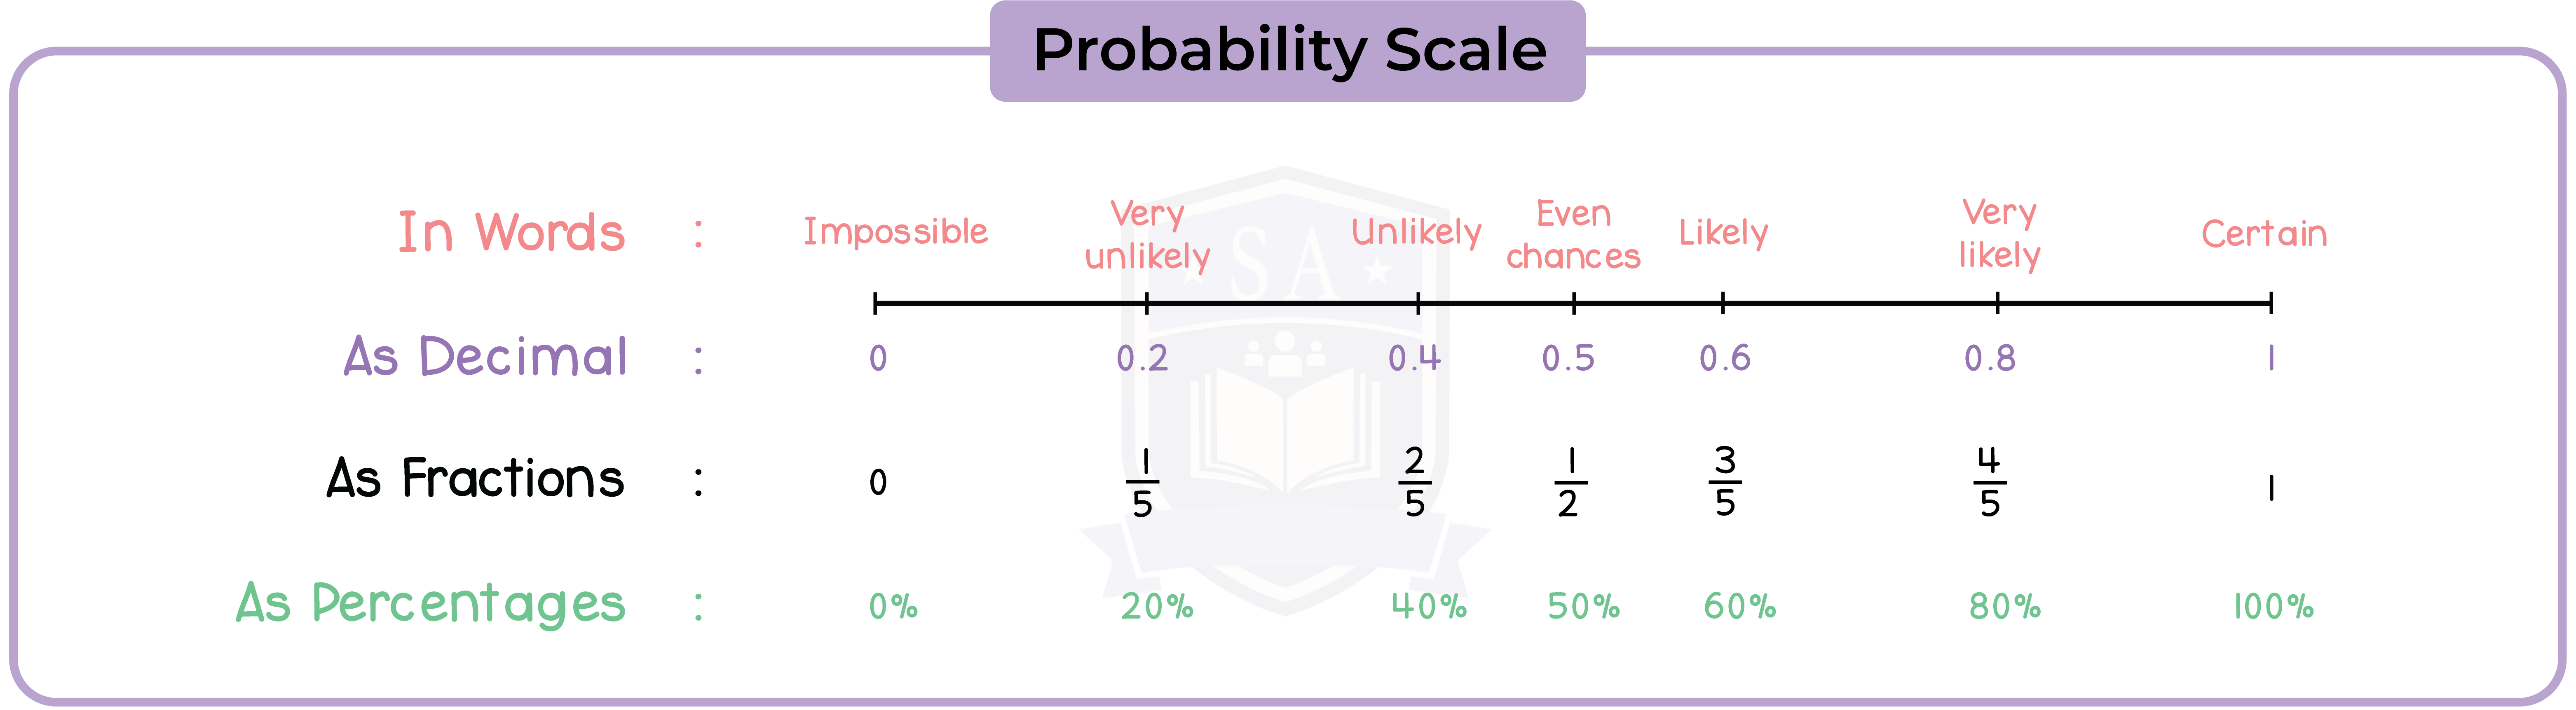 edexcel_igcse_mathematics a_topic 40_probability_005_Probability Scale